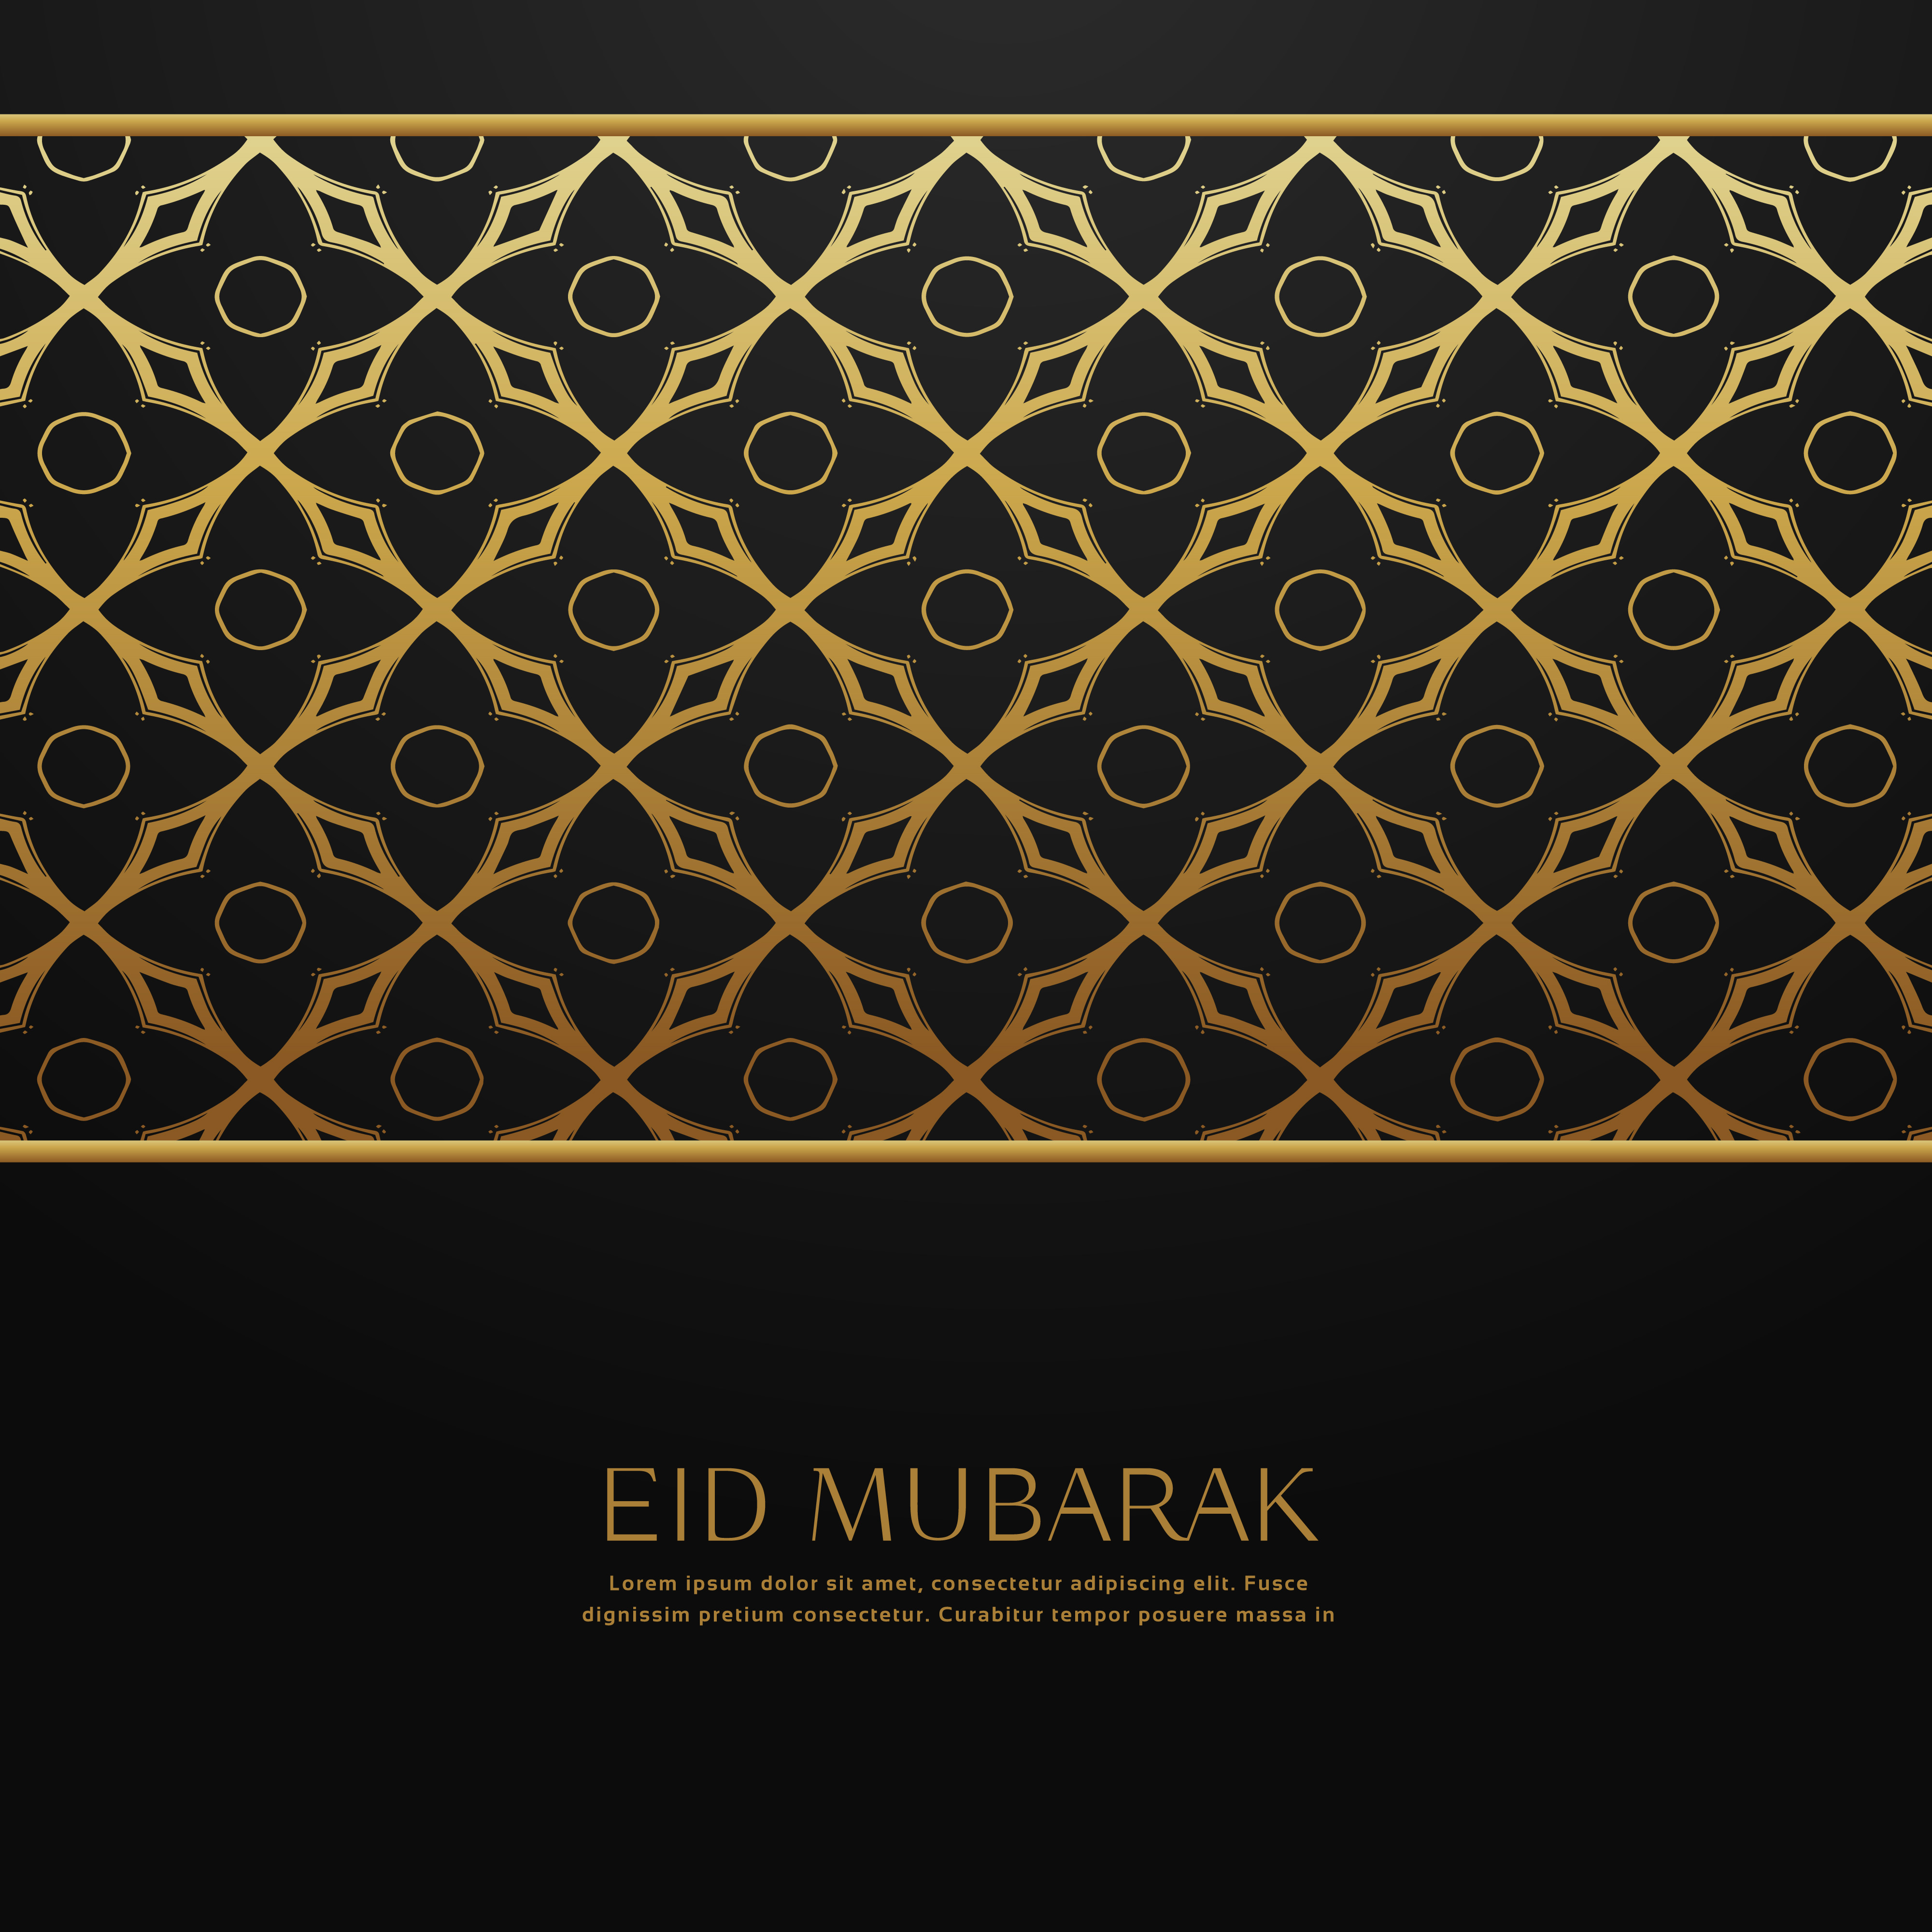 Muslim eid festival background with islamic pattern 